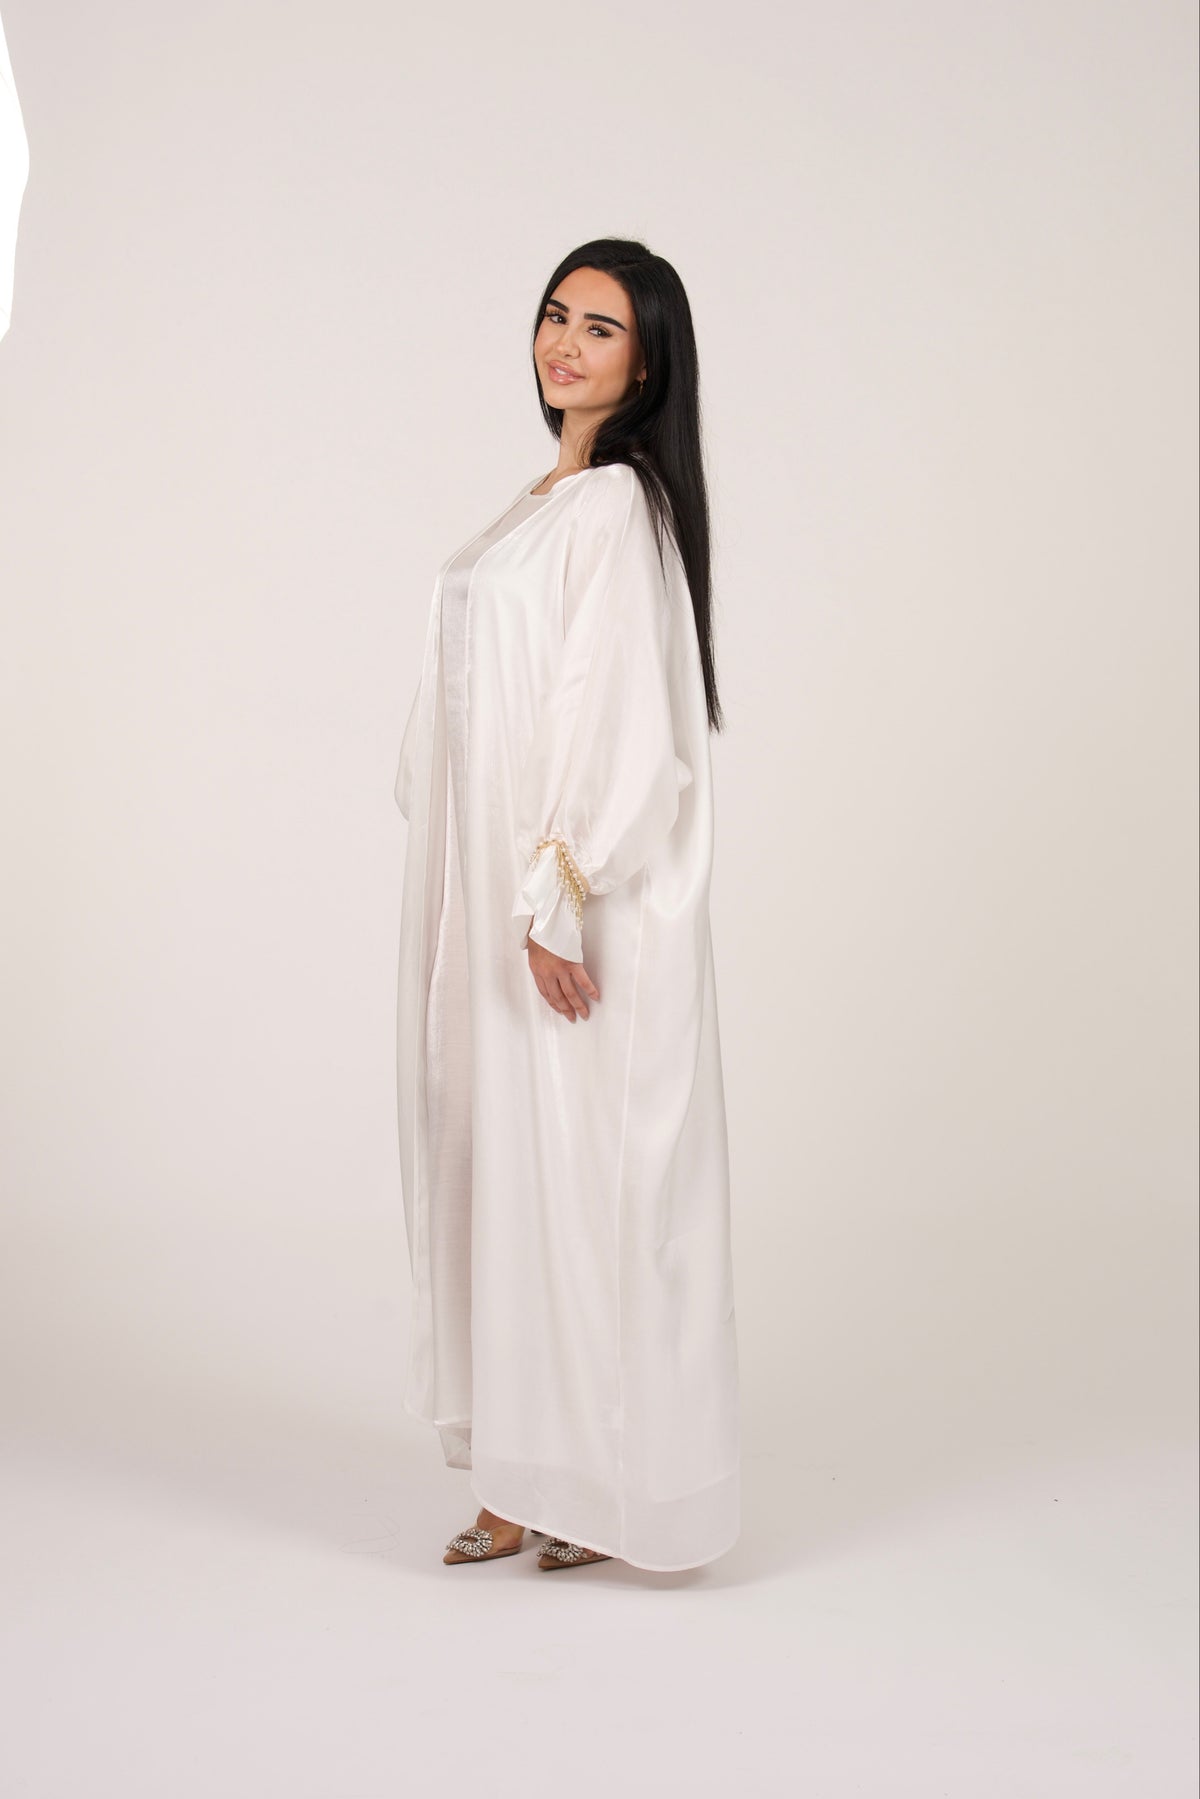 Exclusive White Abaya Set